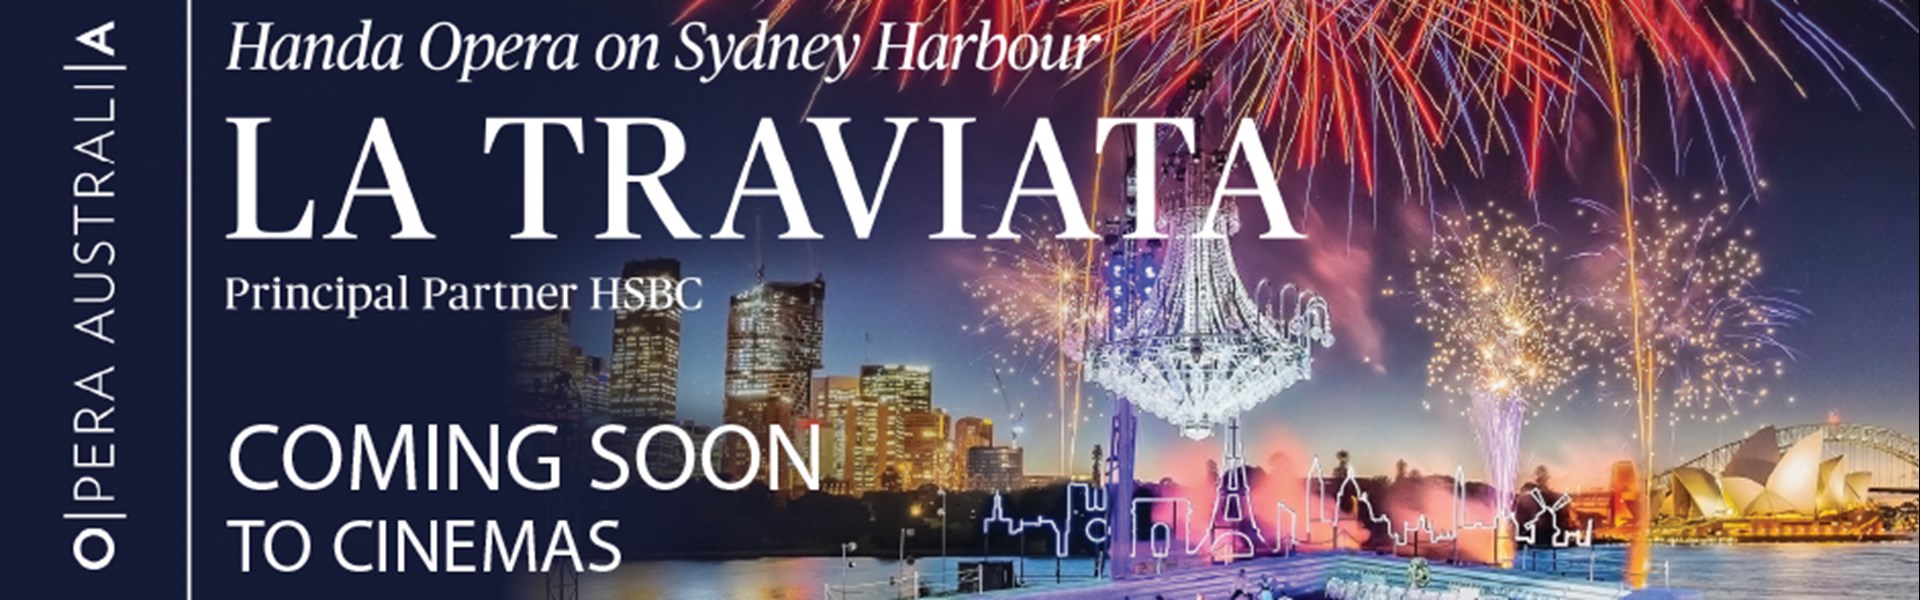 La Traviata on Sydney Harbour (Live Recording)